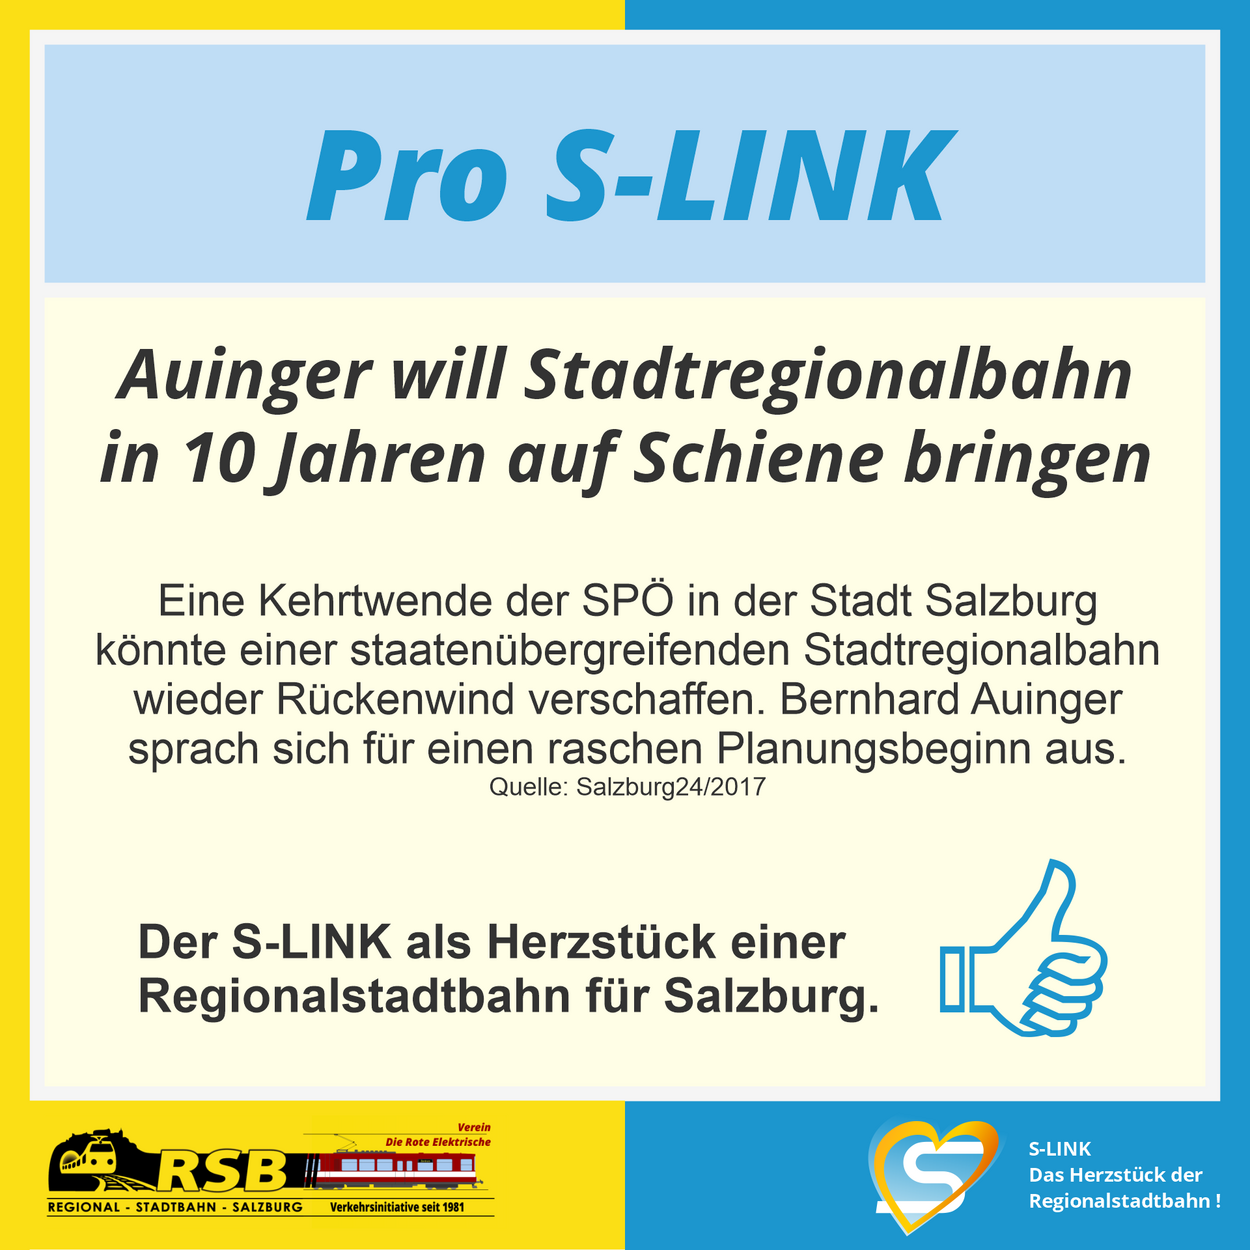 Pro S-LINK